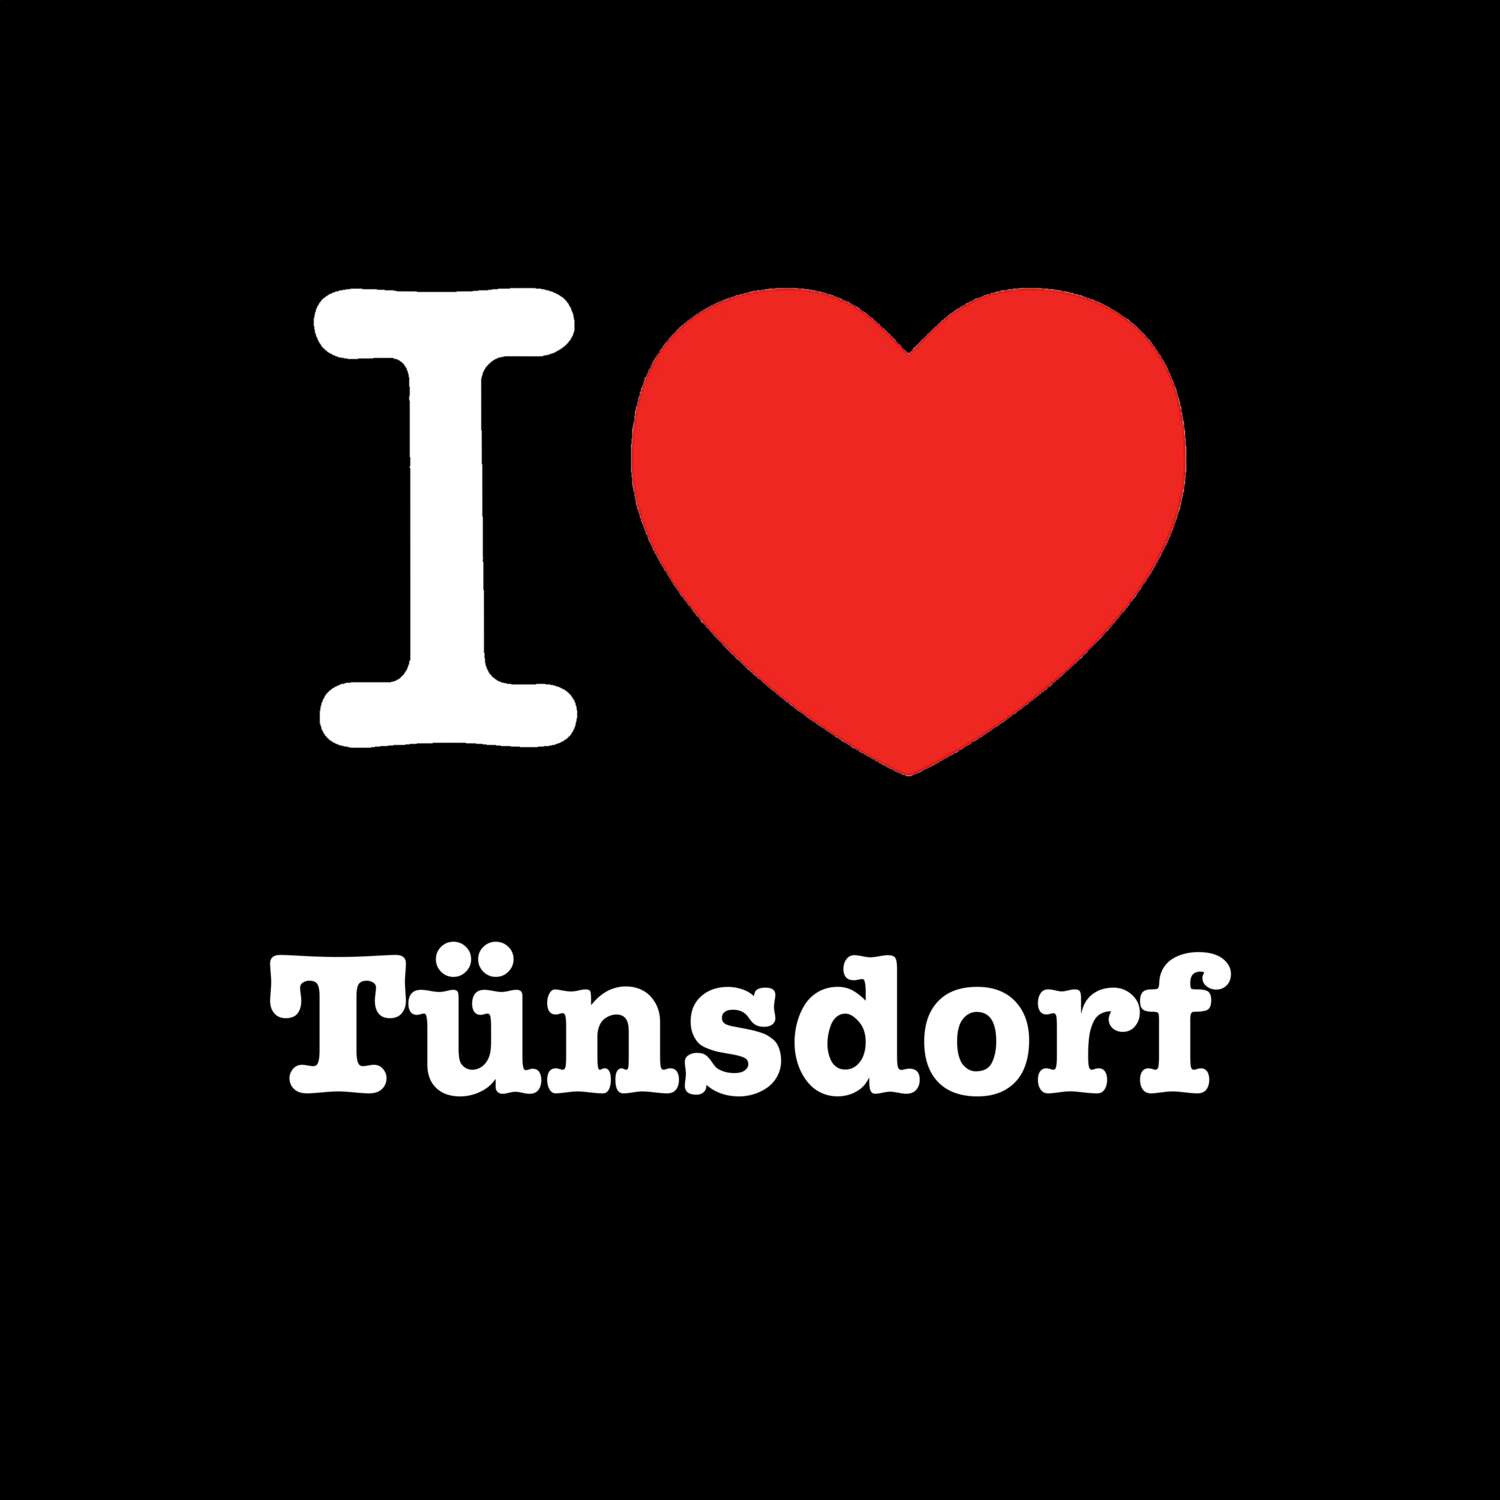 Tünsdorf T-Shirt »I love«